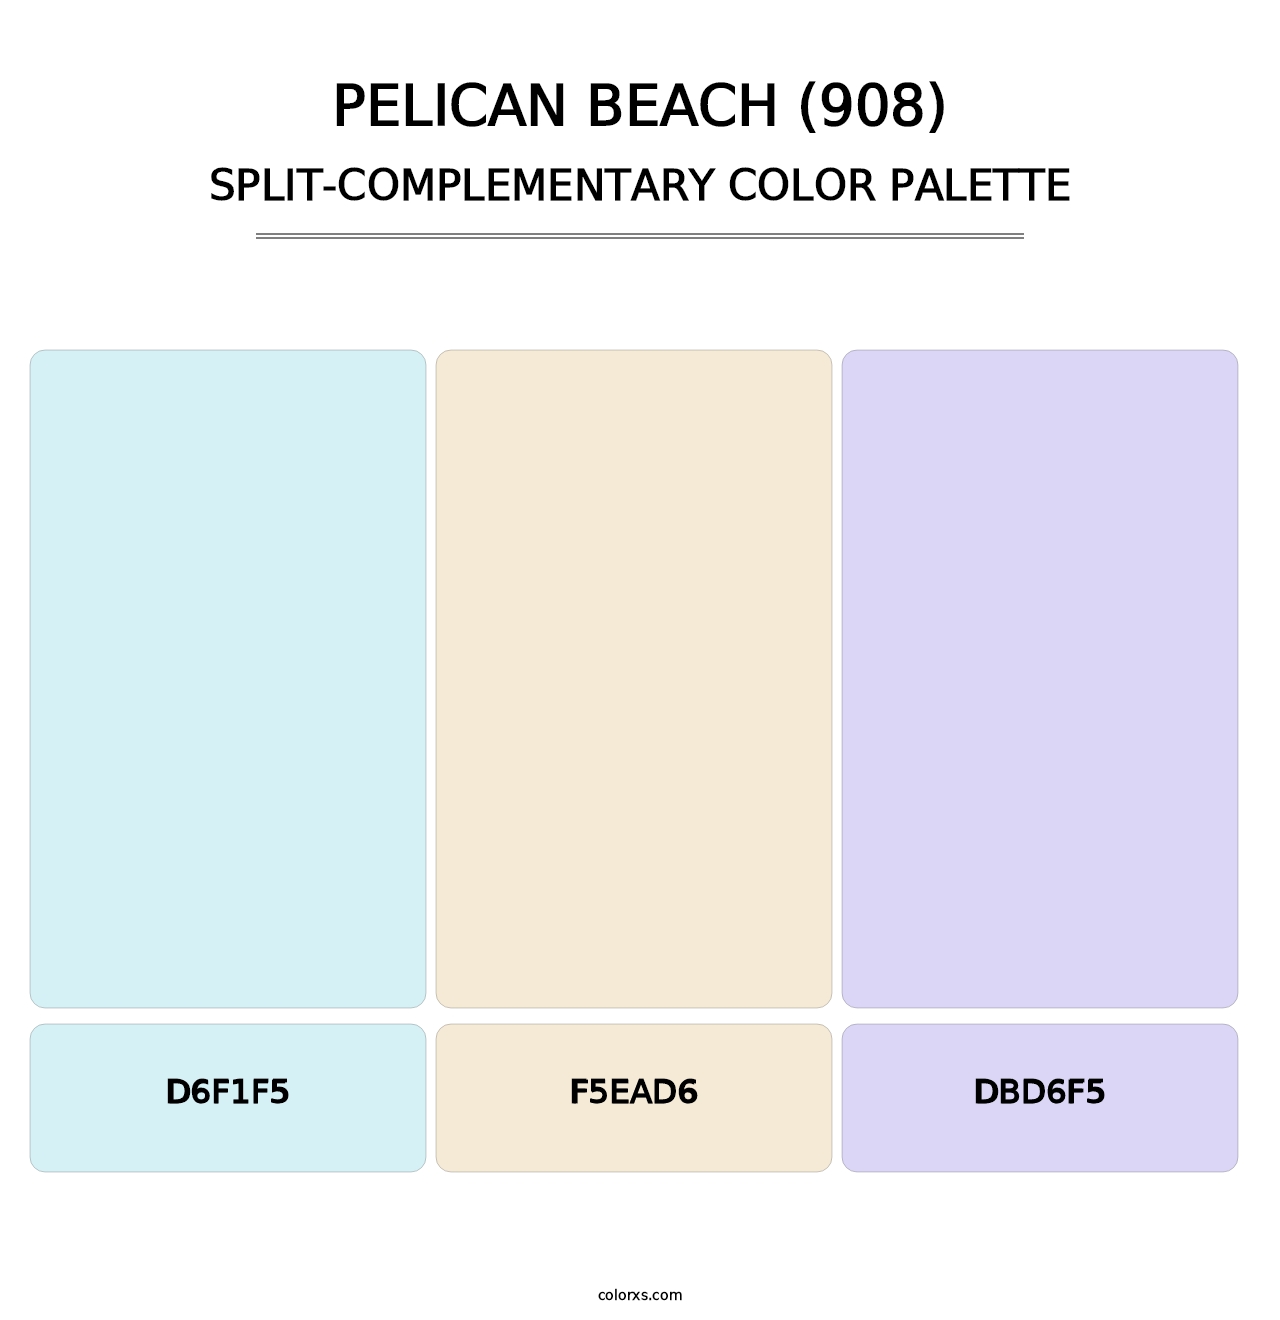 Pelican Beach (908) - Split-Complementary Color Palette